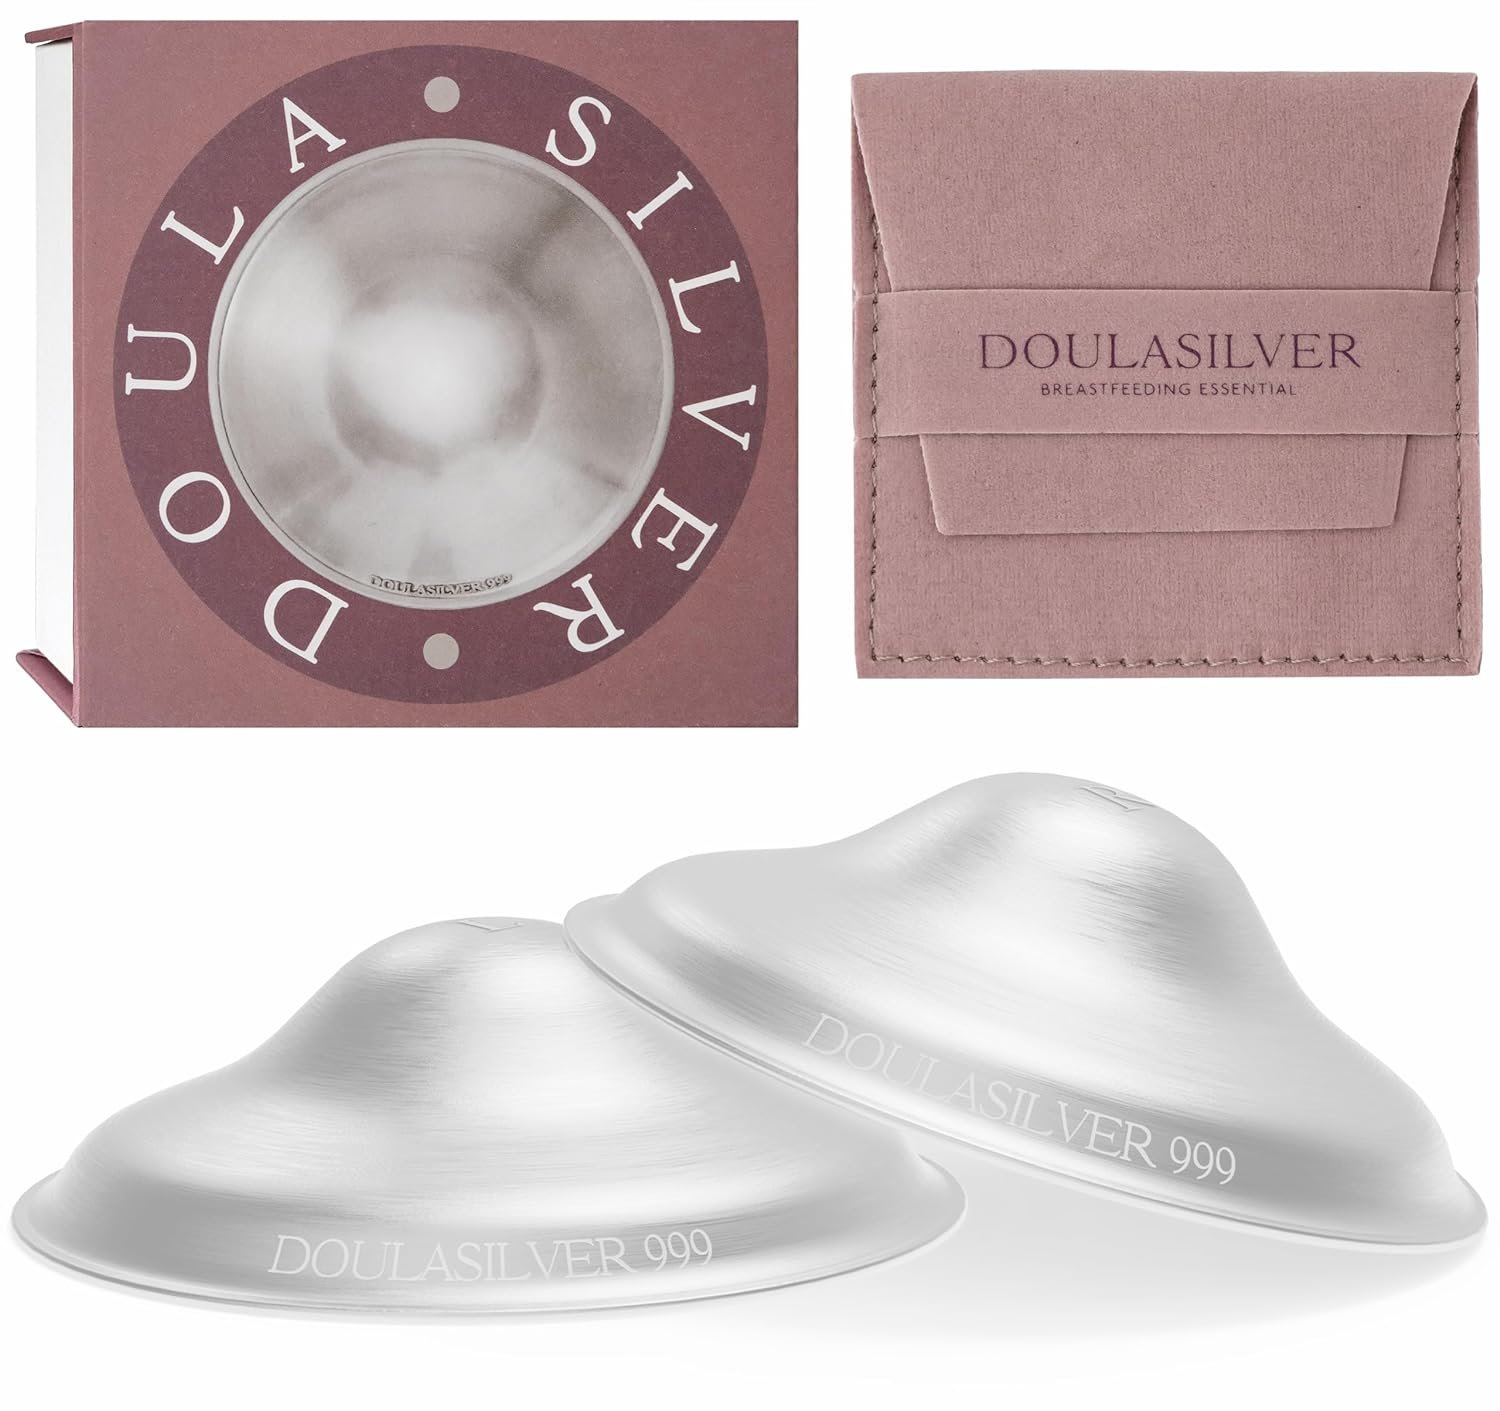 Doulasilver The Original Silver Nursing Cups - XL - Breastfeeding Essentials - Nipple Shield - Breast Feeding - 999 Pure Silver - Nipple Shields for Nursing Newborn - Newborn Essentials Must-Haves